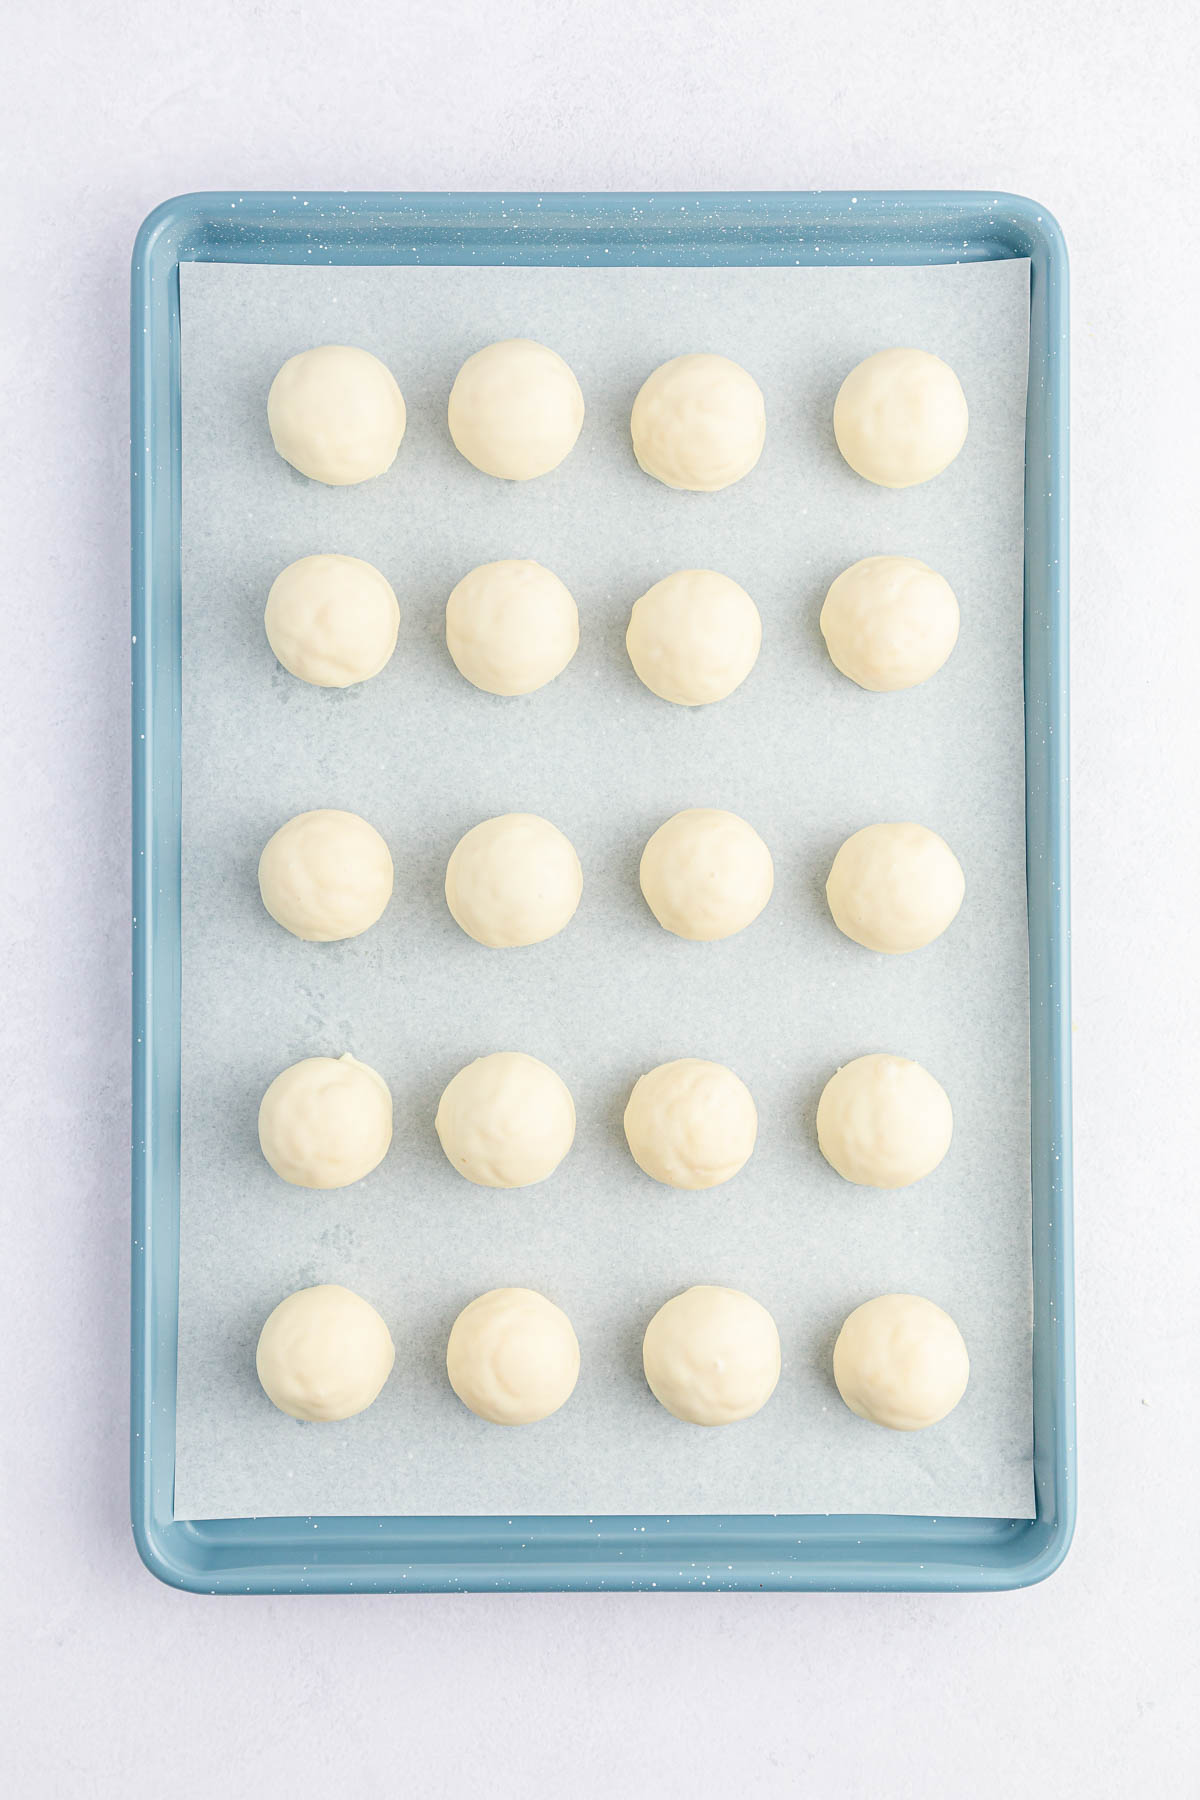 Cake balls with white chocolate on baking sheet